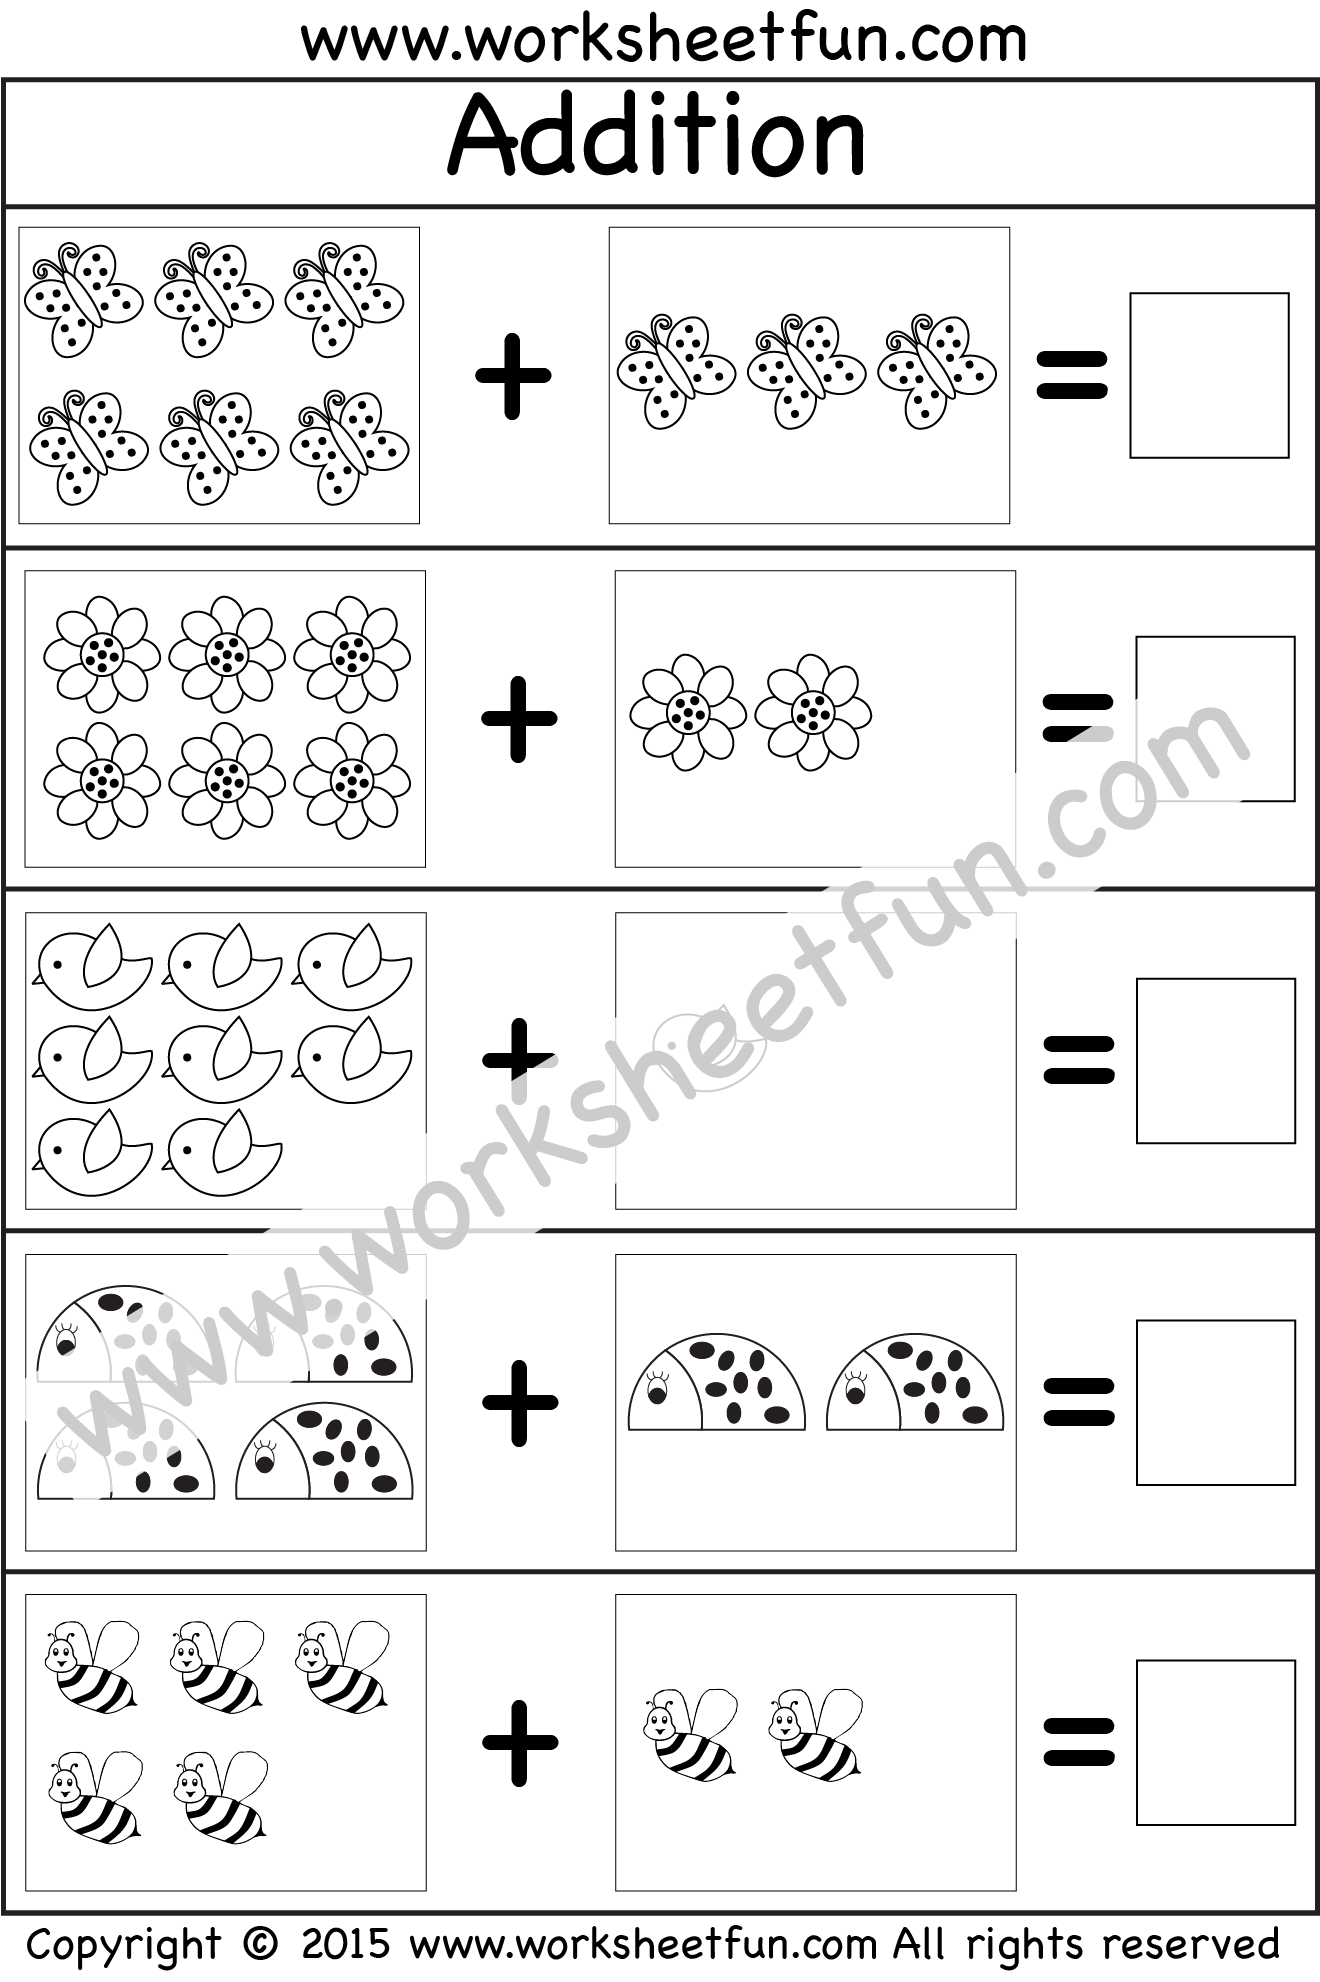 picture-addition-beginner-addition-10-kindergarten-addition-worksheets-free-printable